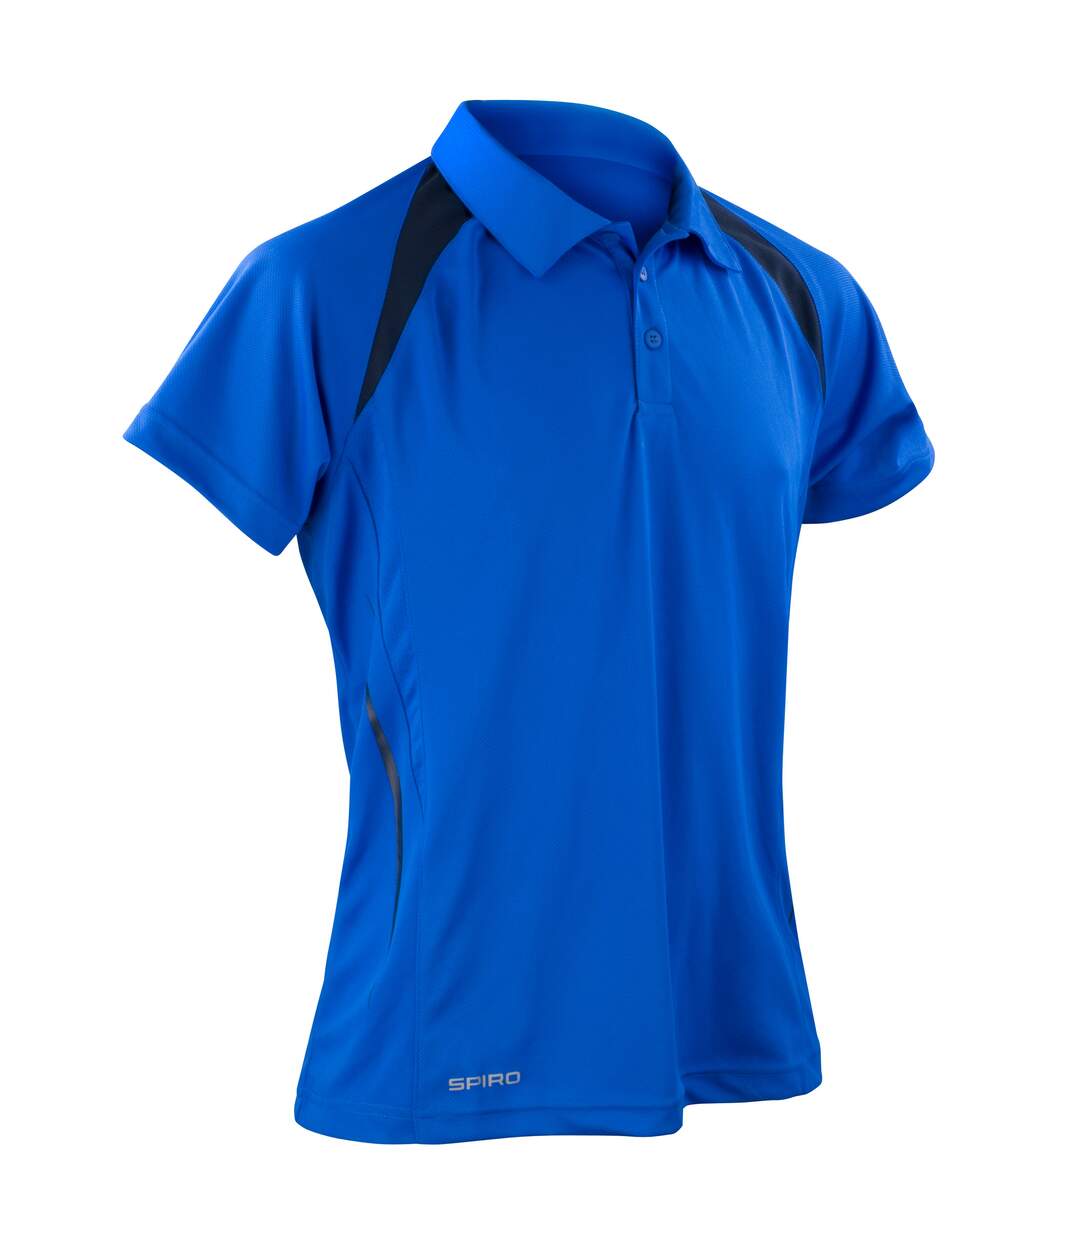 Spiro - Polo sport à manches courtes - Homme (Bleu roi/Bleu marine) - UTRW1470